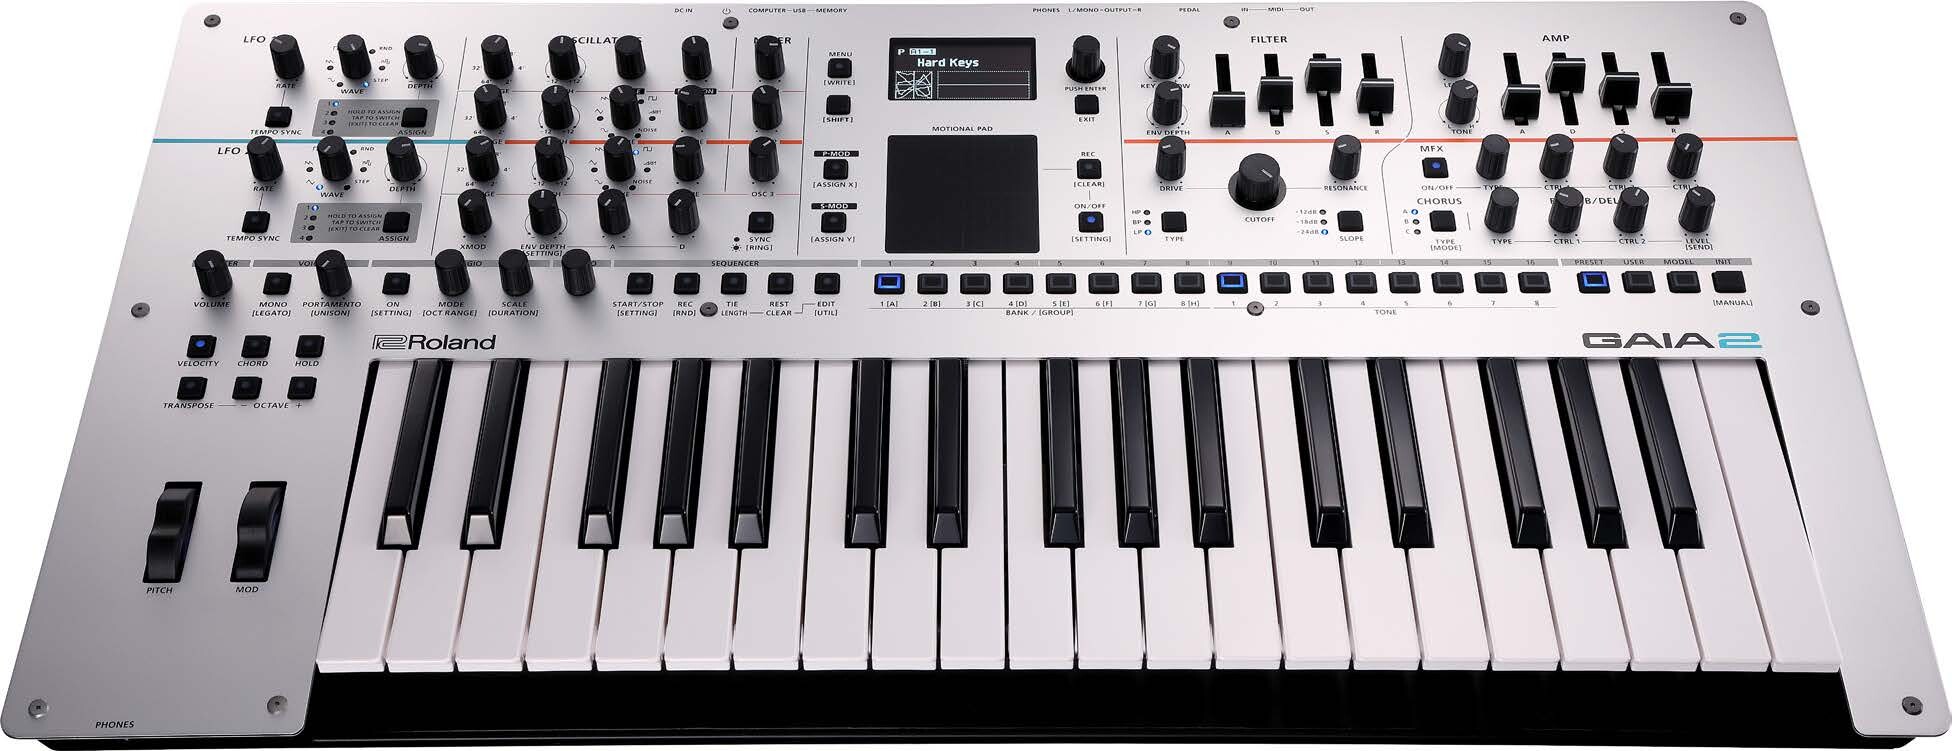 37 key music synthesizer keyboard